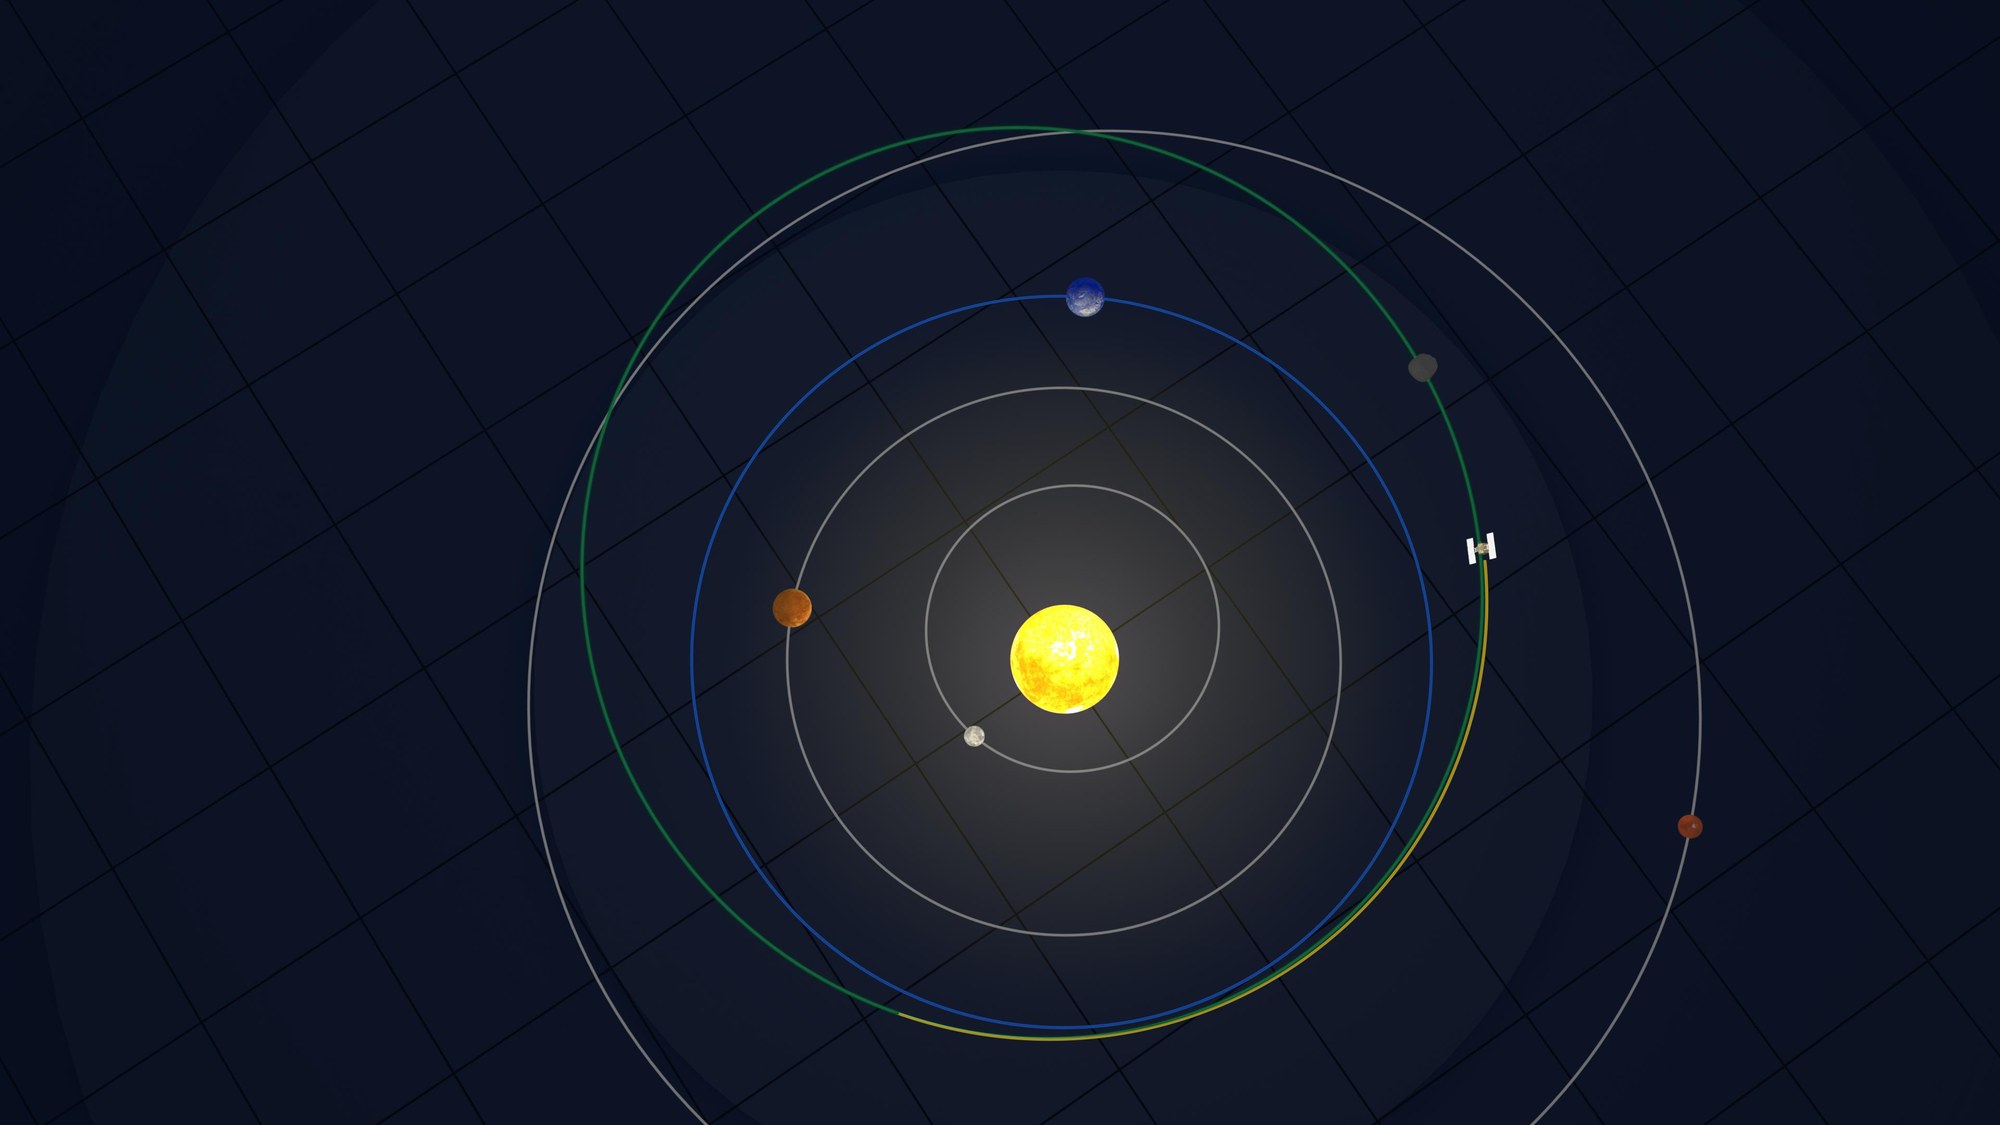 Hayabusa2 im Anflug auf Asteroid Ryugu